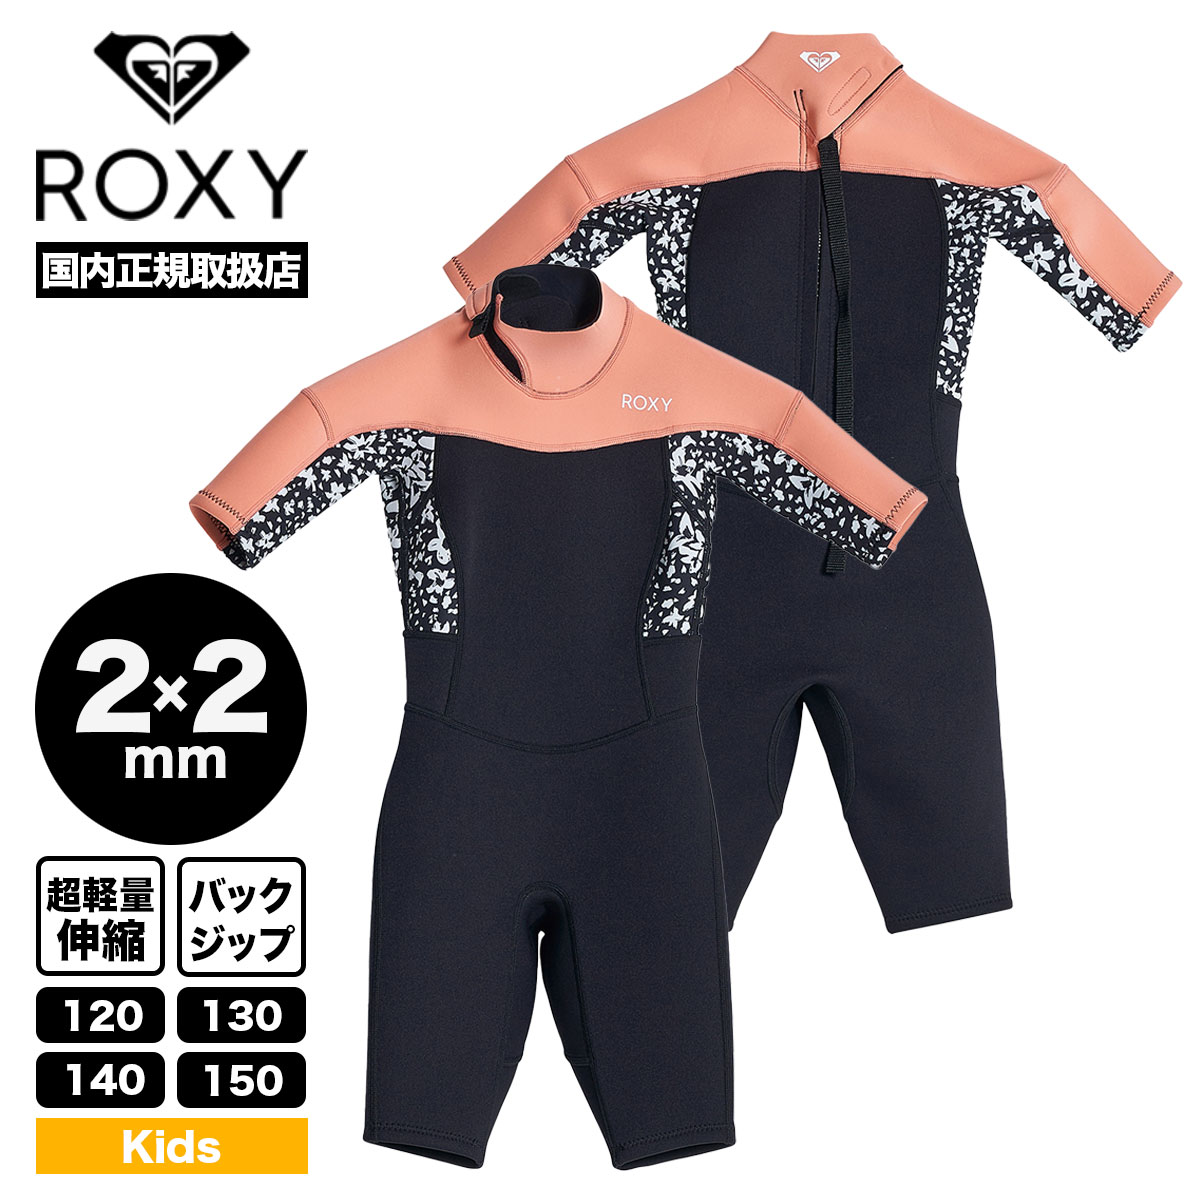 roxy サーフィン スプリング ロキシー ウェットスーツ 2×2mm キッズ 子供用 ウェット 1...